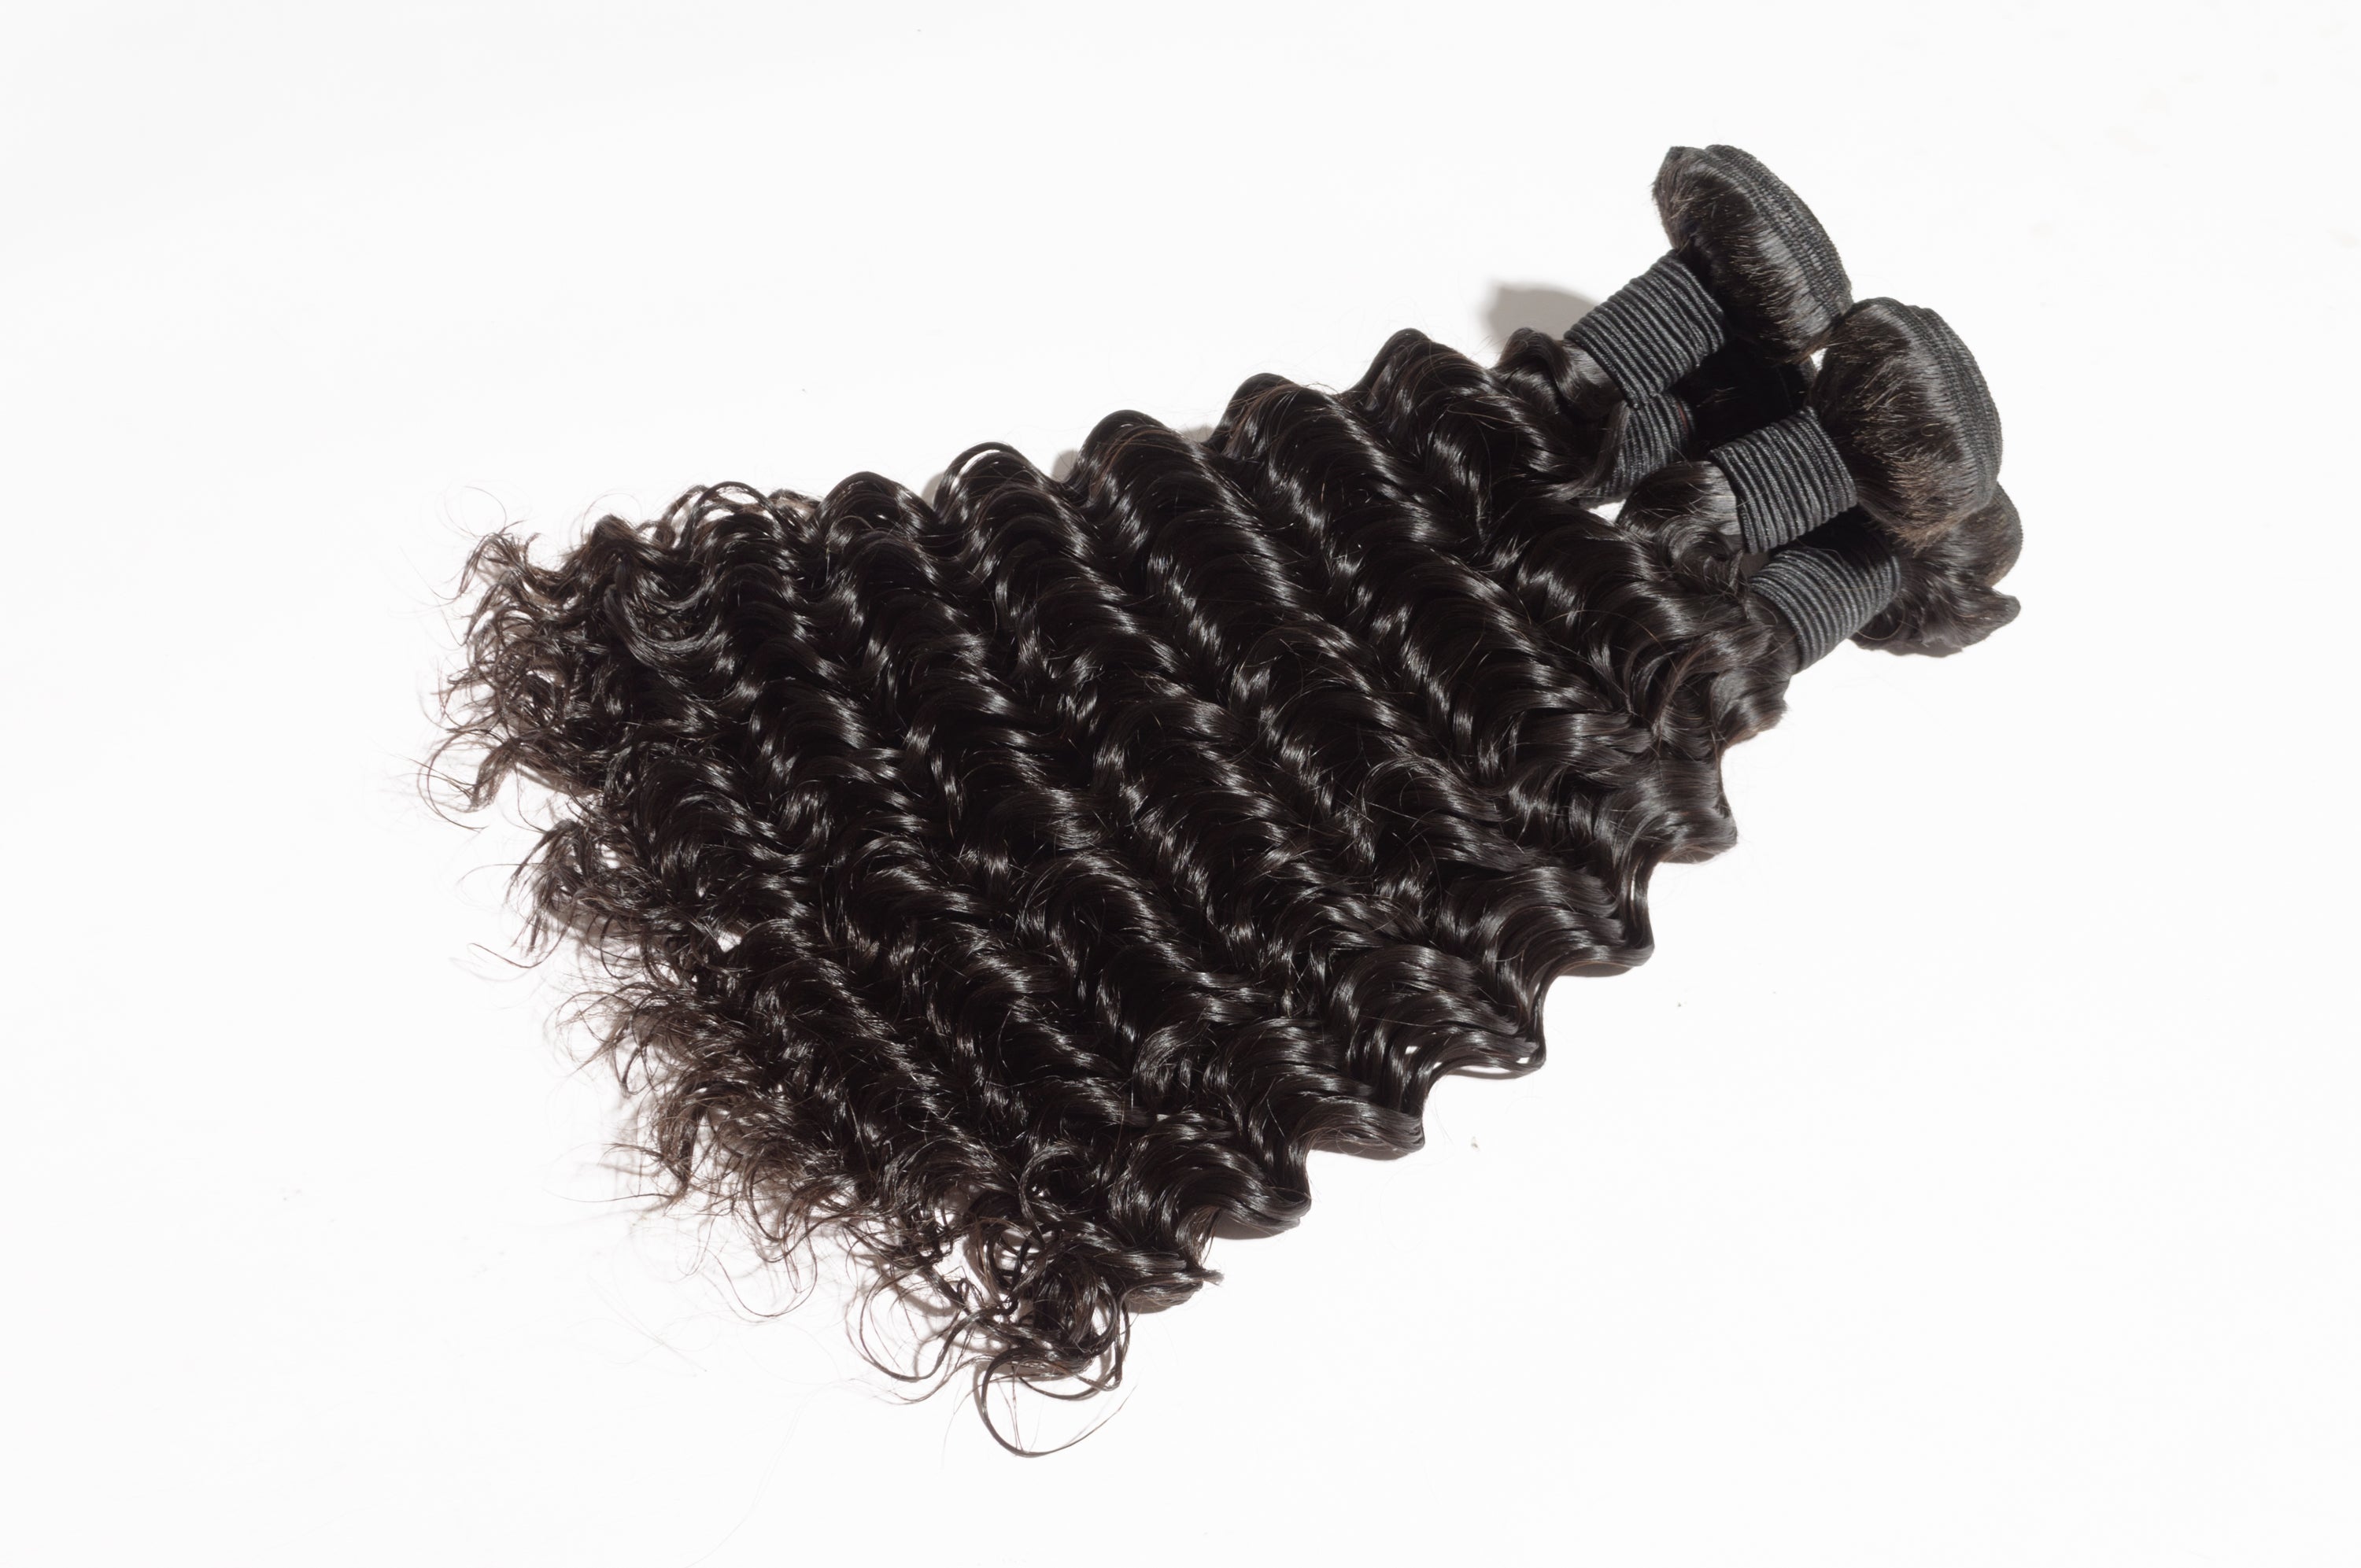 10A Deep Wave Raw Virgin Hair Bundles #1B Natural Black 10-30inch All Cuticles Intact And Aligned